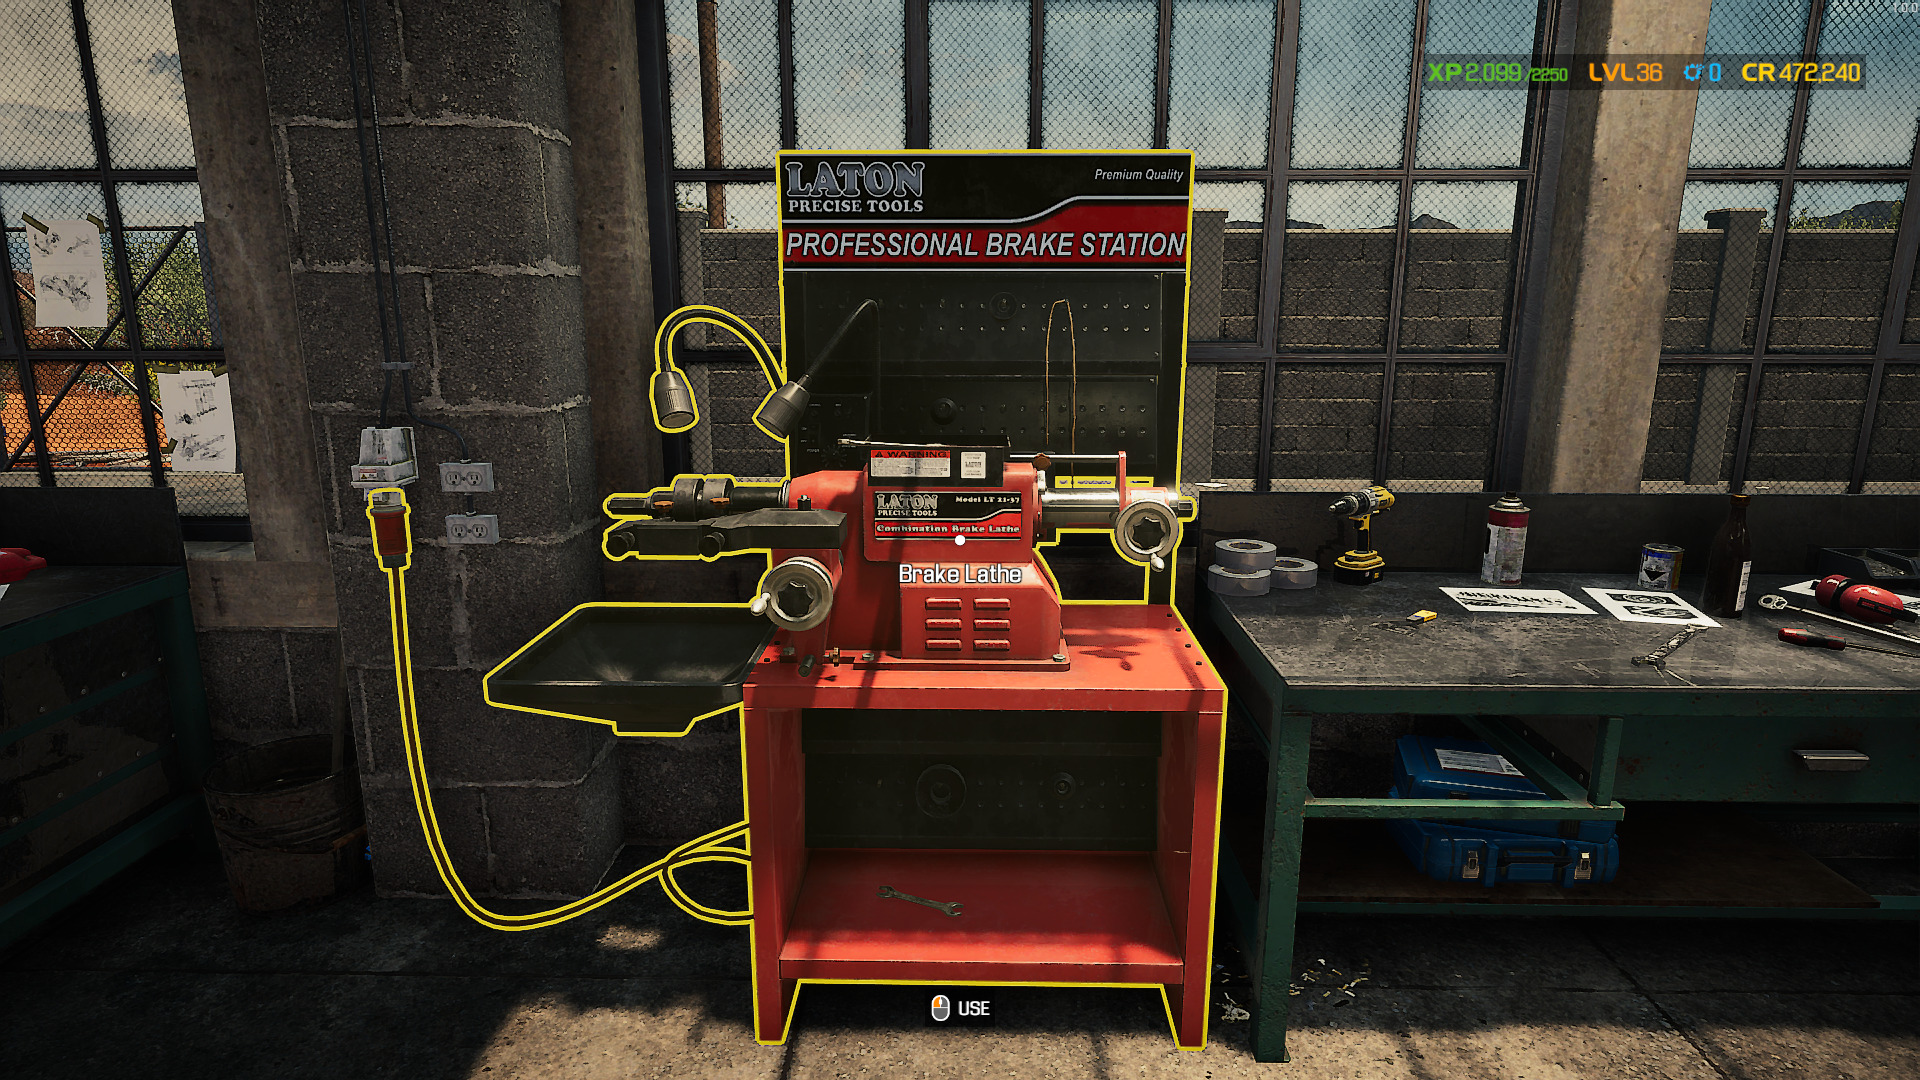 A screenshot showing the Professional Brake Station in Car Mechanic Simulator